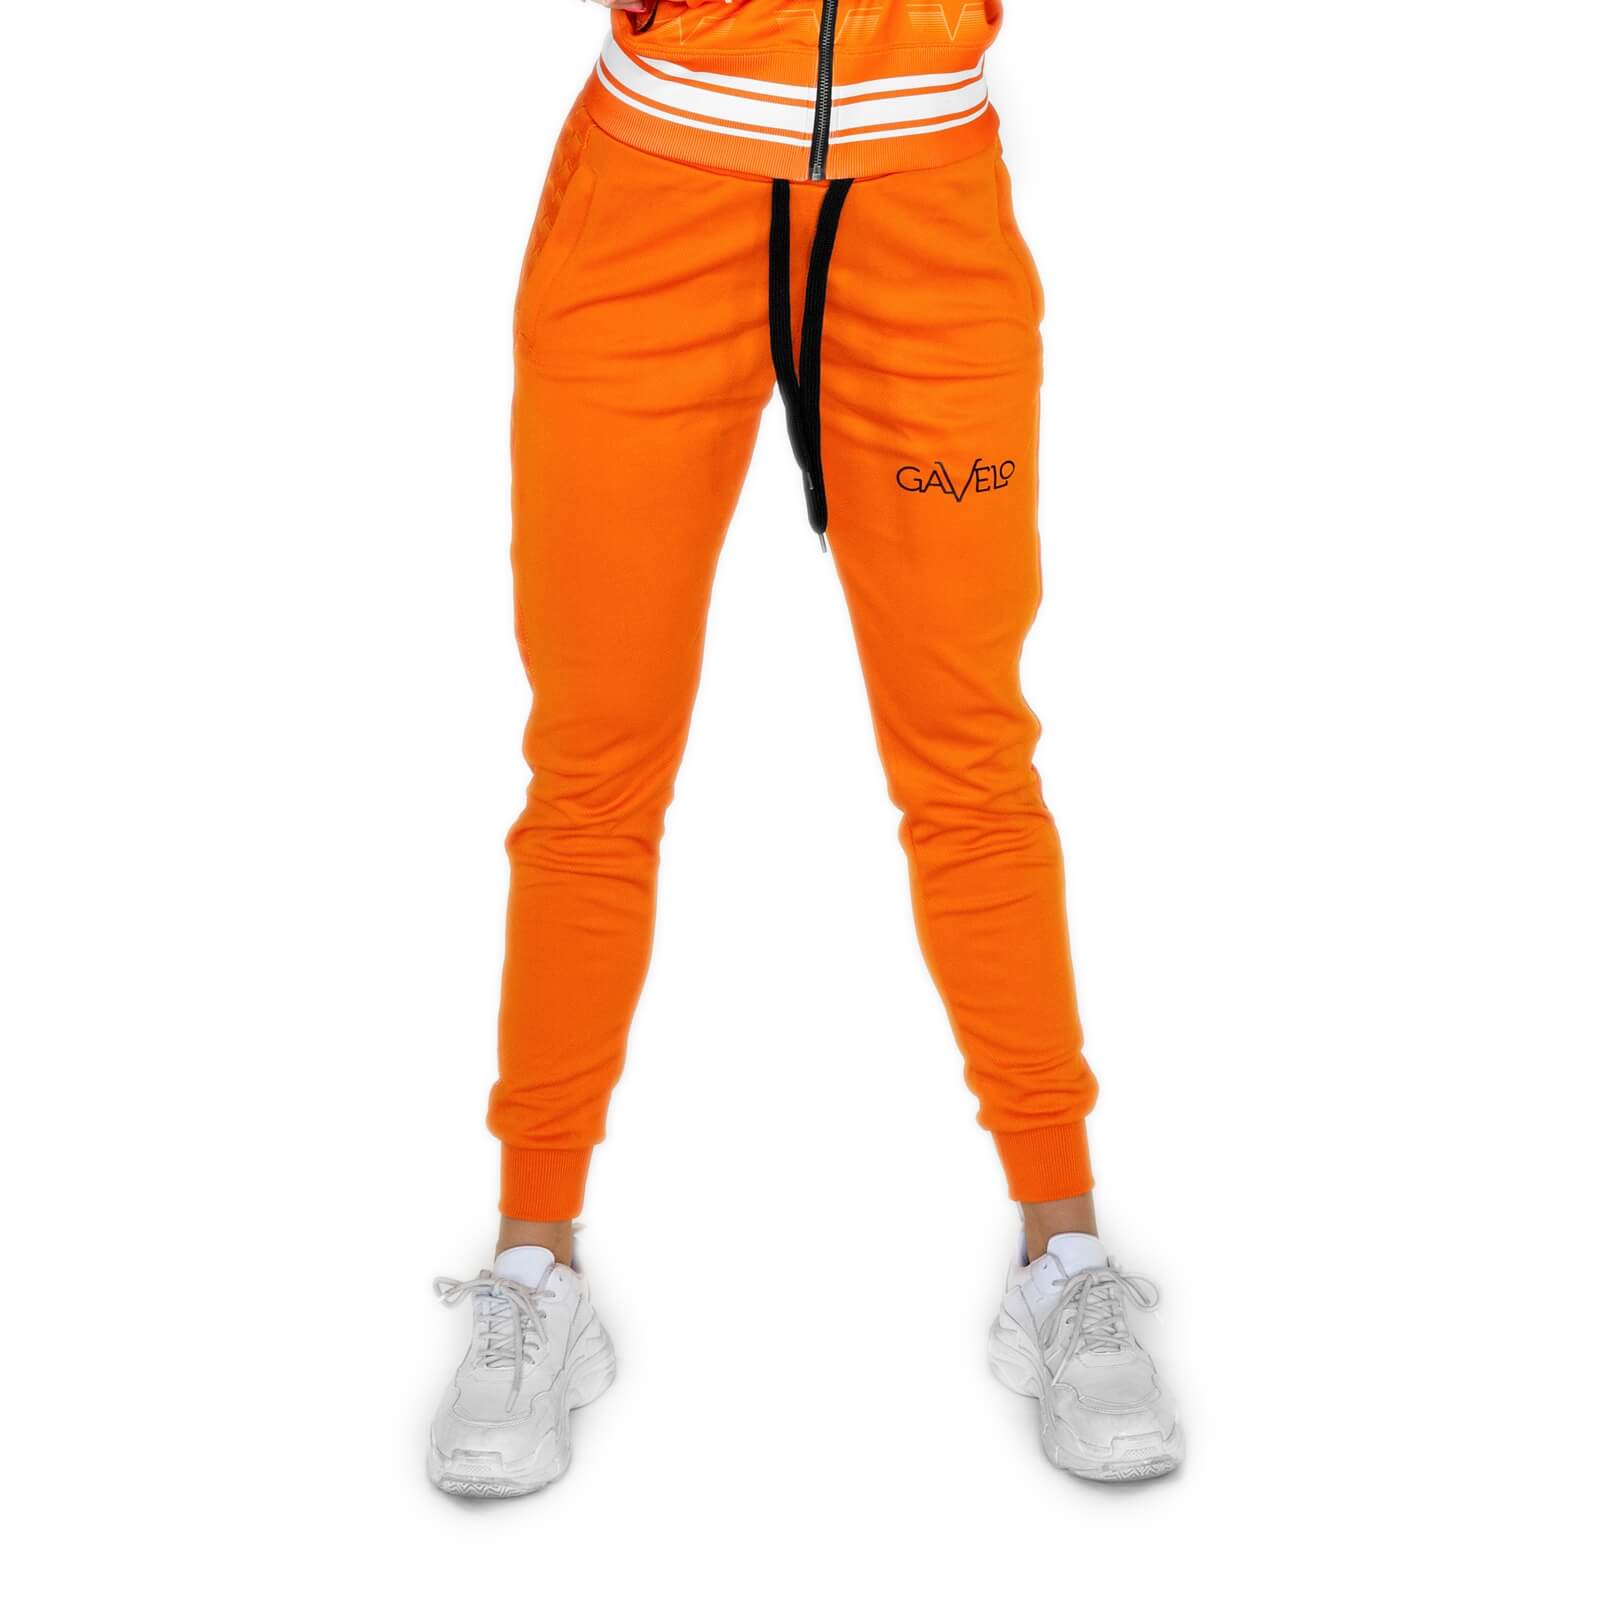 Track Pants, orange, Gavelo